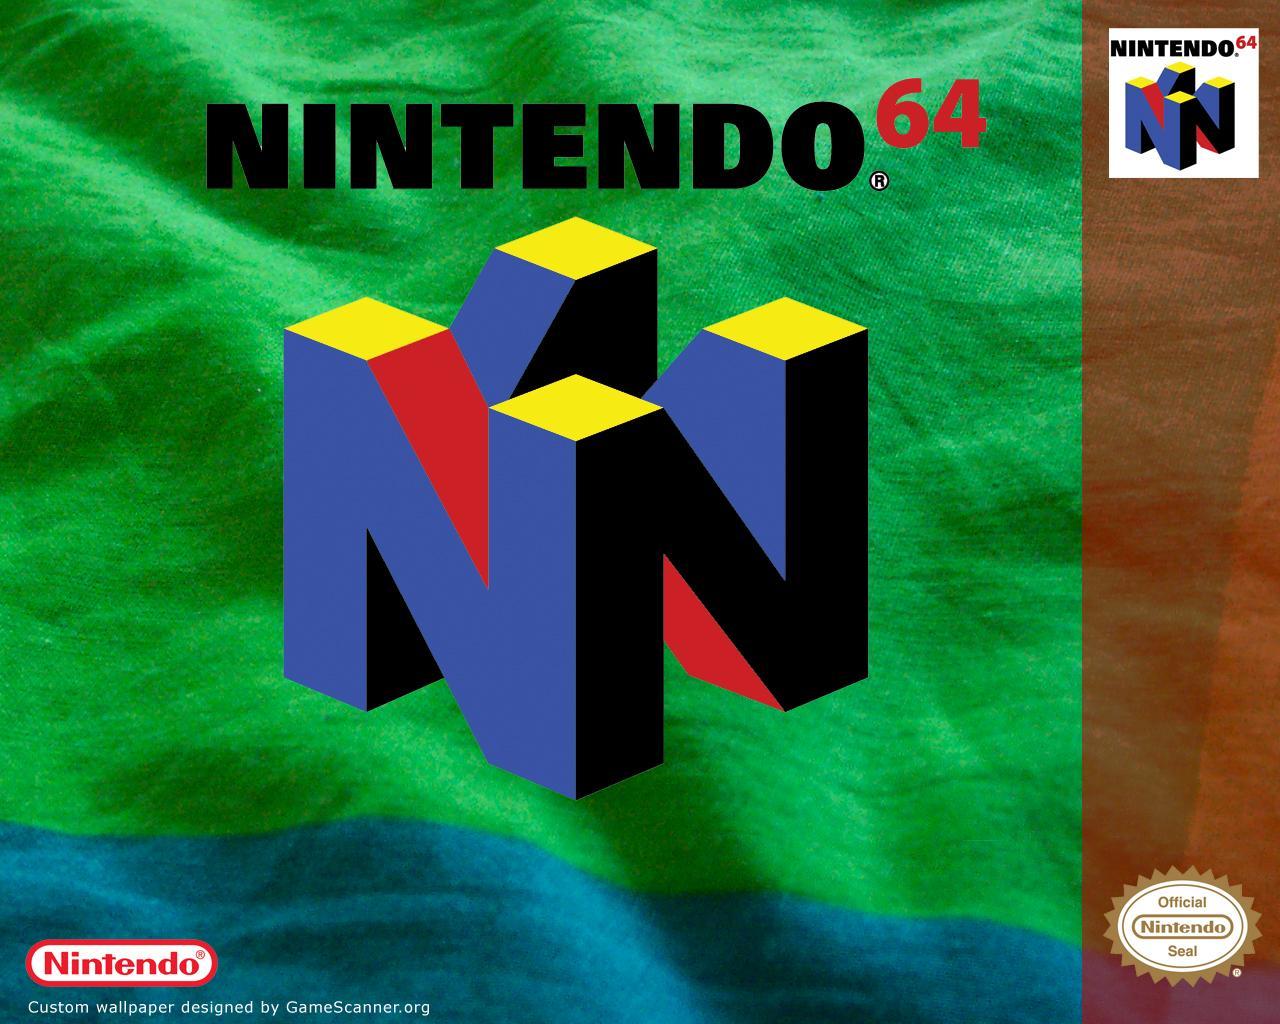 Free download Nintendo 64 N 64 Wallpapers 26503012 1280x1024 for your Deskt...